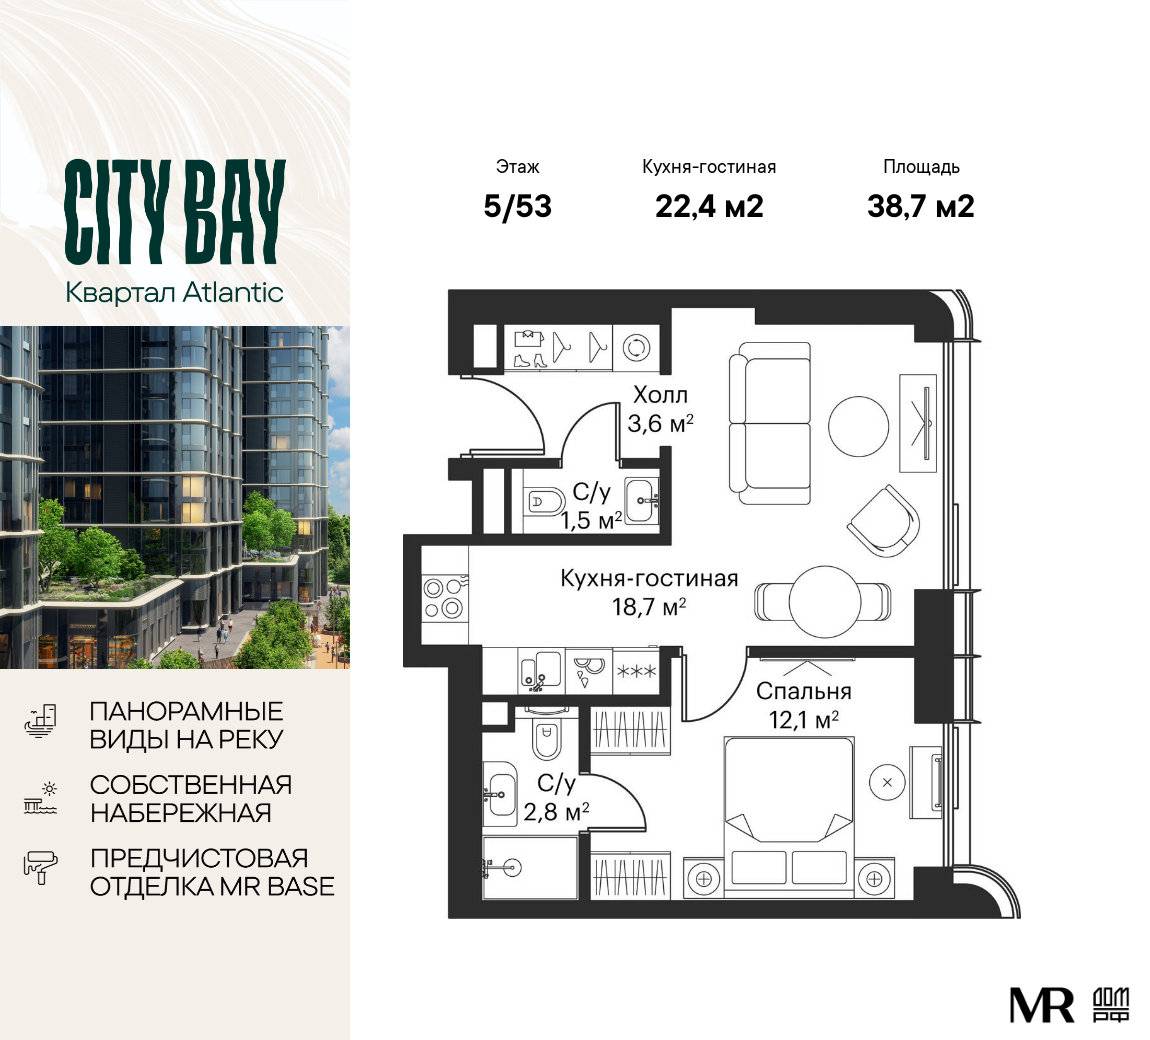 Планировка 1-комнатная квартира в ЖК City Bay (Сити Бэй)